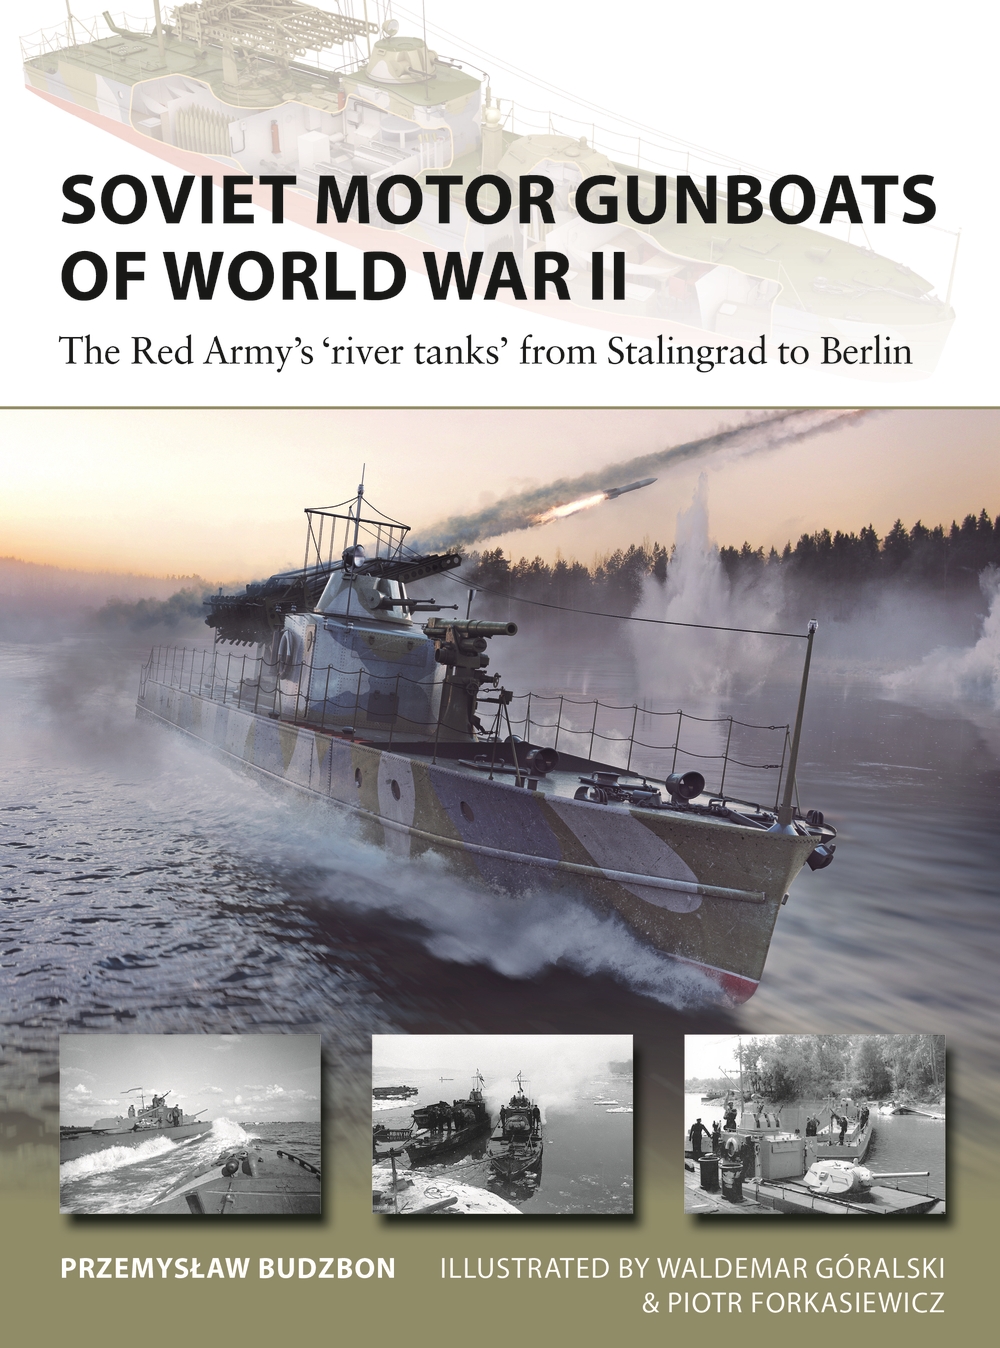 Soviet Motor Gunboats of World War II book jacket